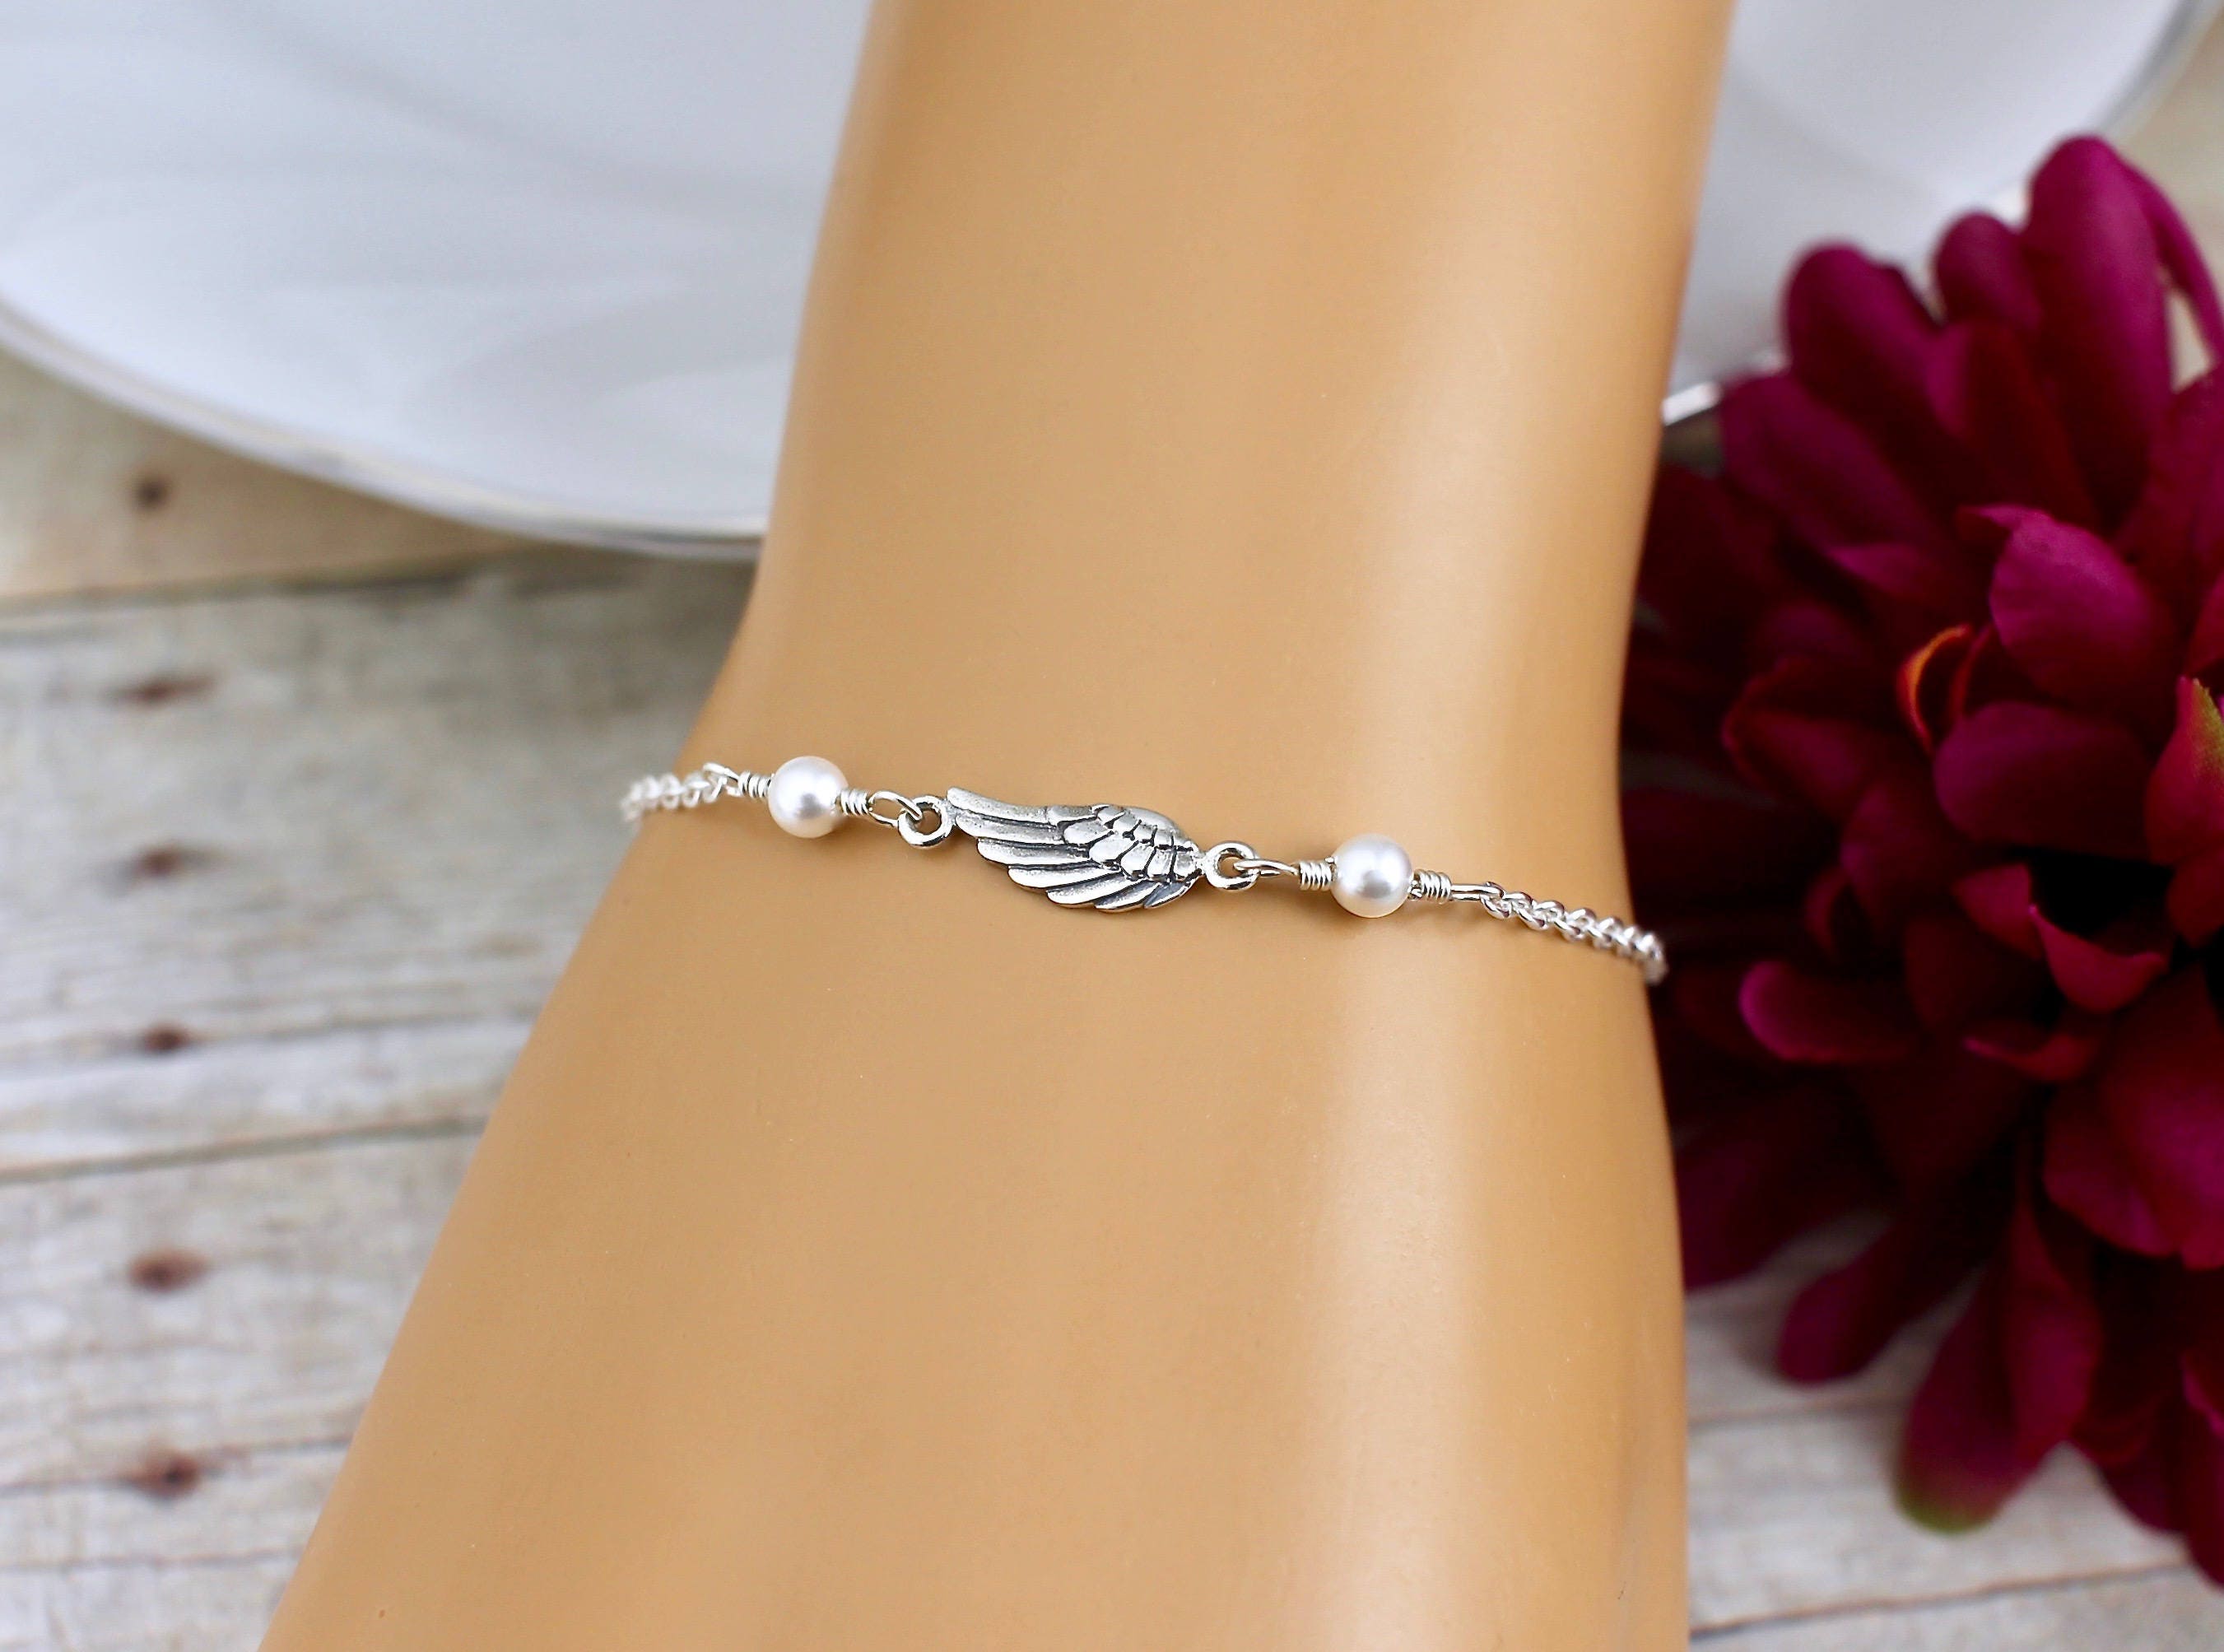 Artwork Store Adjustable Silver Bracelets Mandala Flower Gradient Charming Fashion Chain Link Bracelets Jewelry for Women